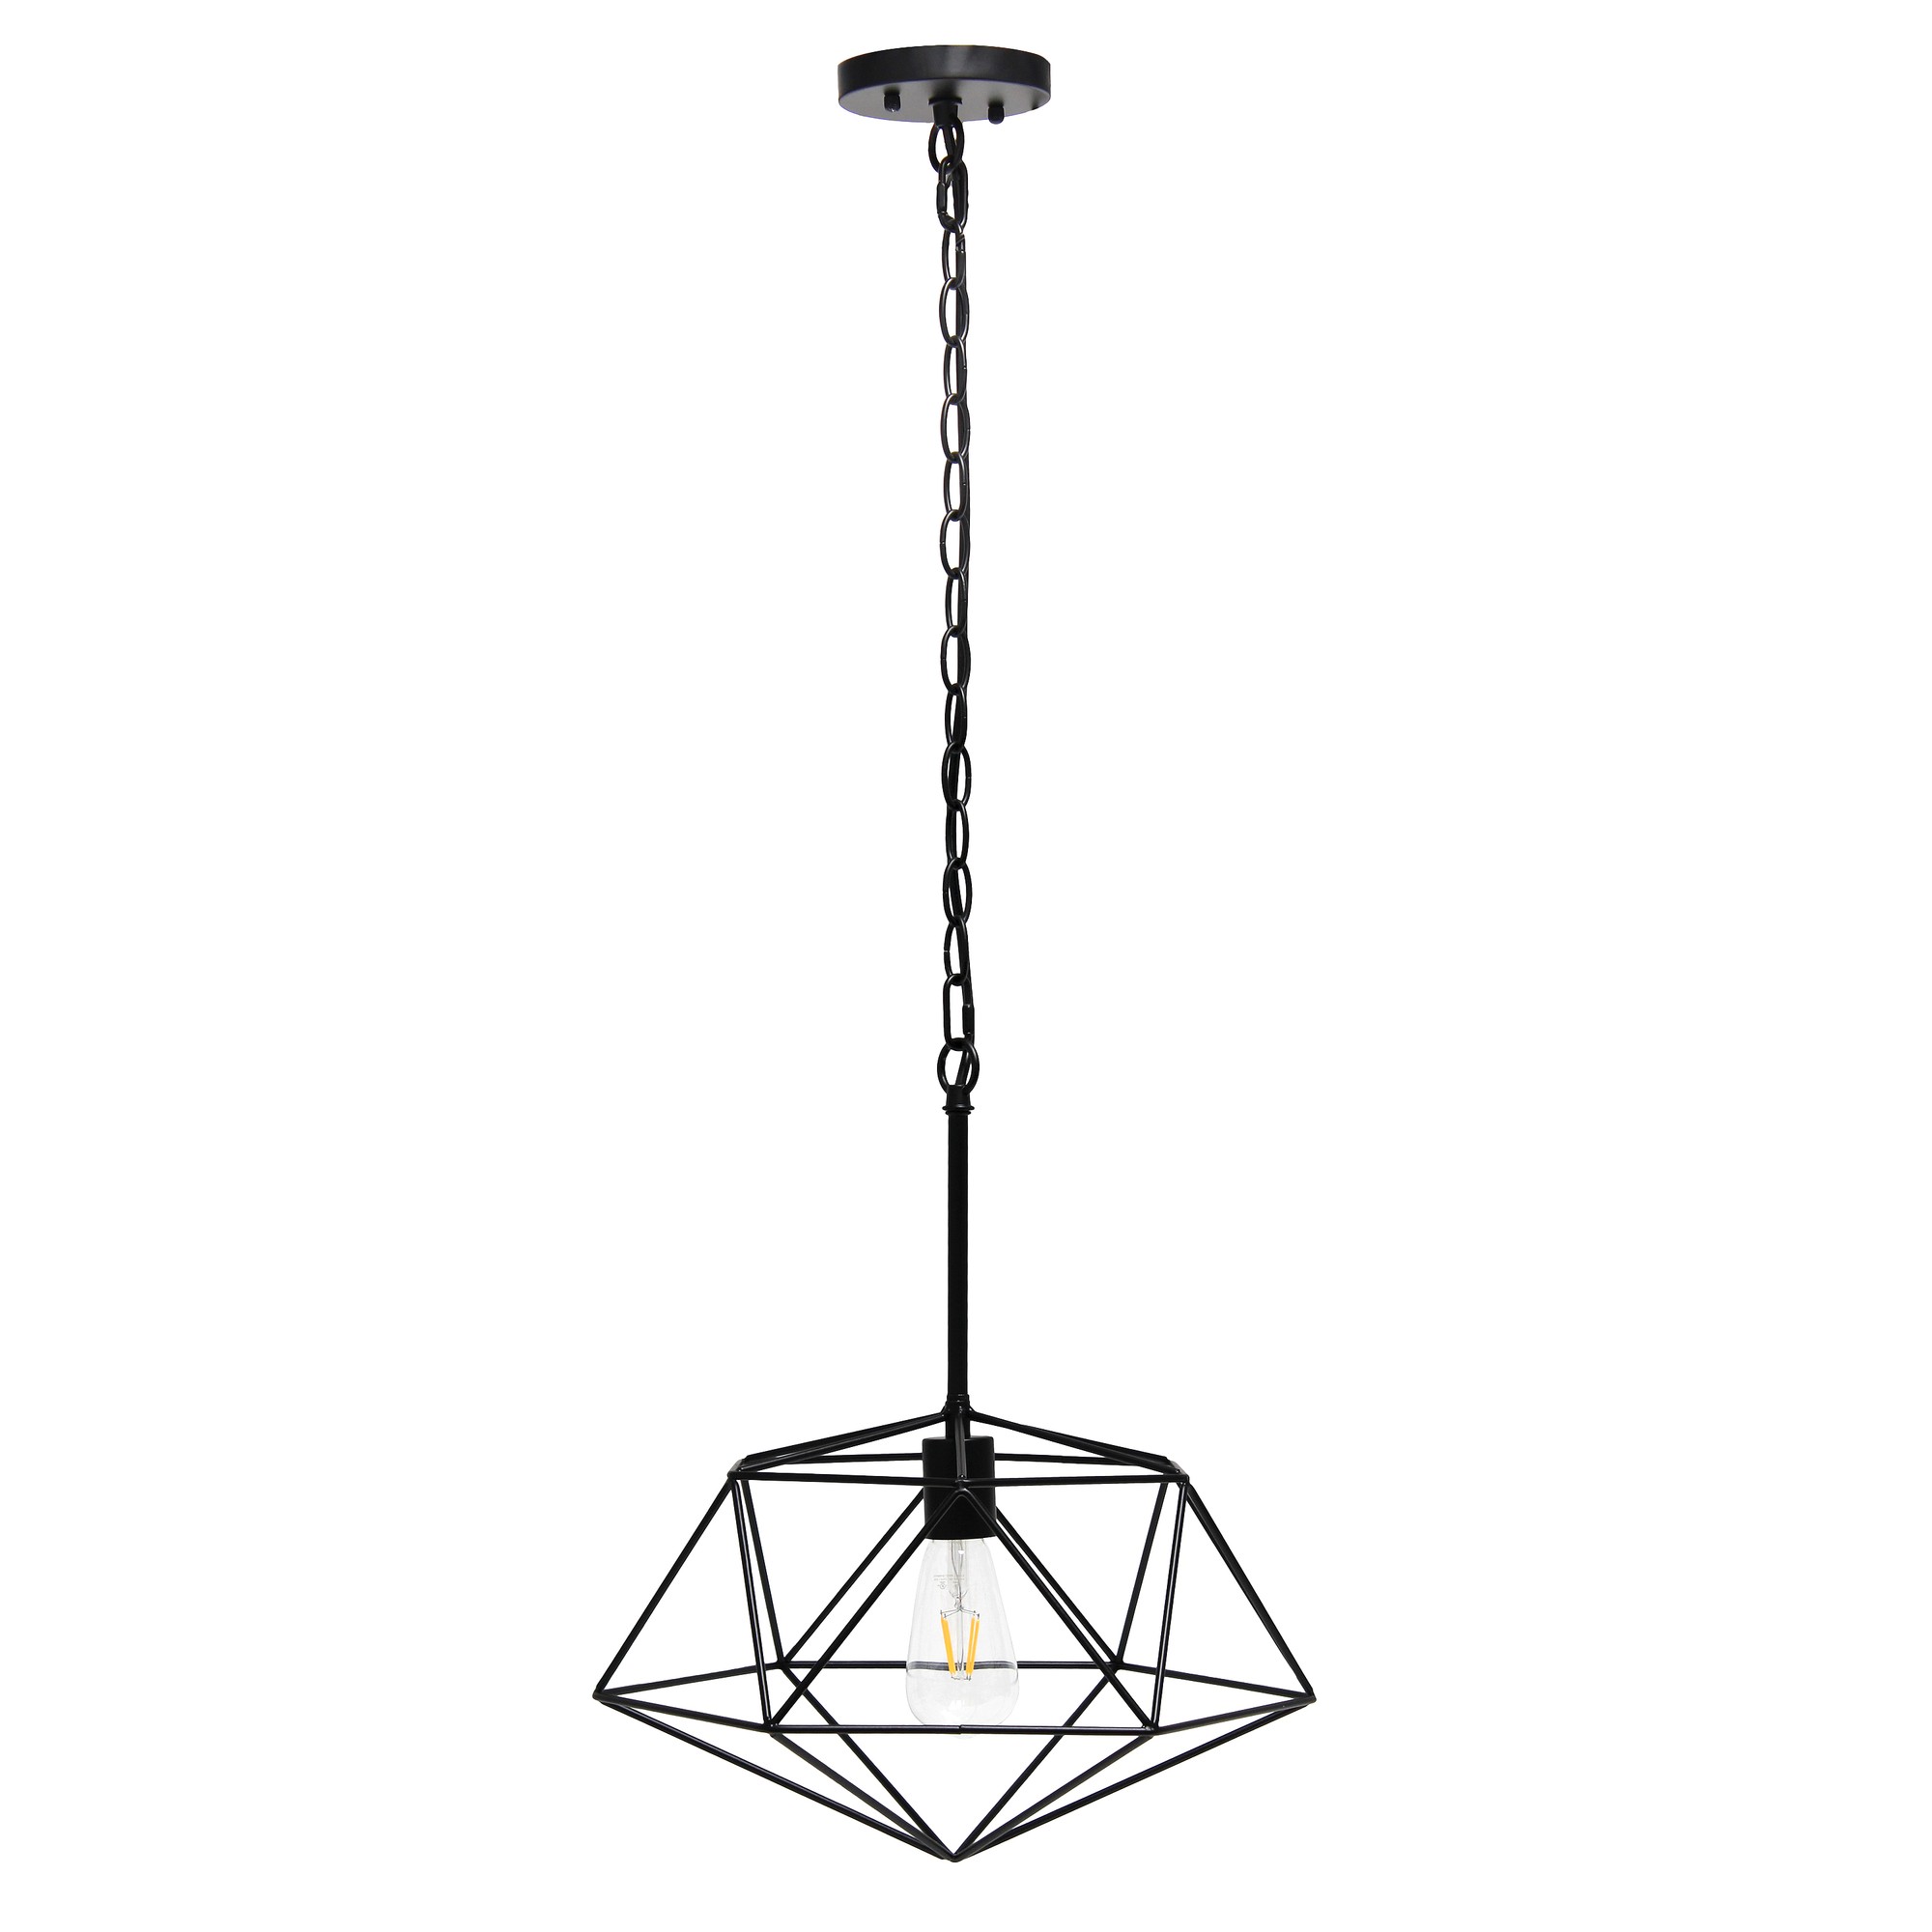 Lalia Home 1 Light 16" Modern Metal Wire Paragon Hanging Ceiling Pendant Fixture, Black